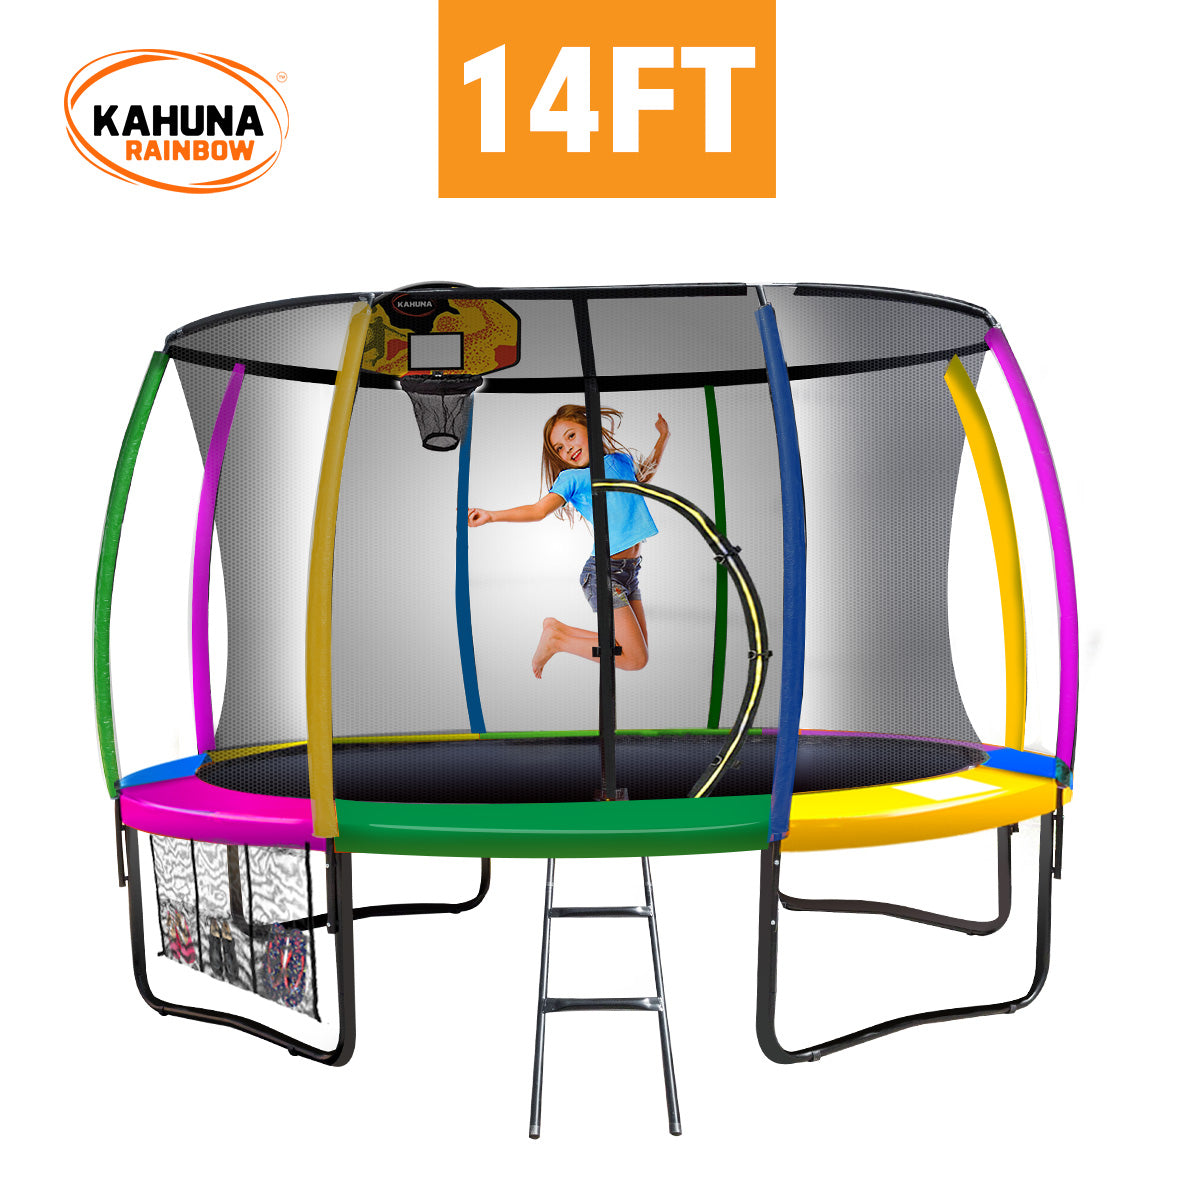 Kahuna Trampoline 14 ft with Basketball Set - Rainbow